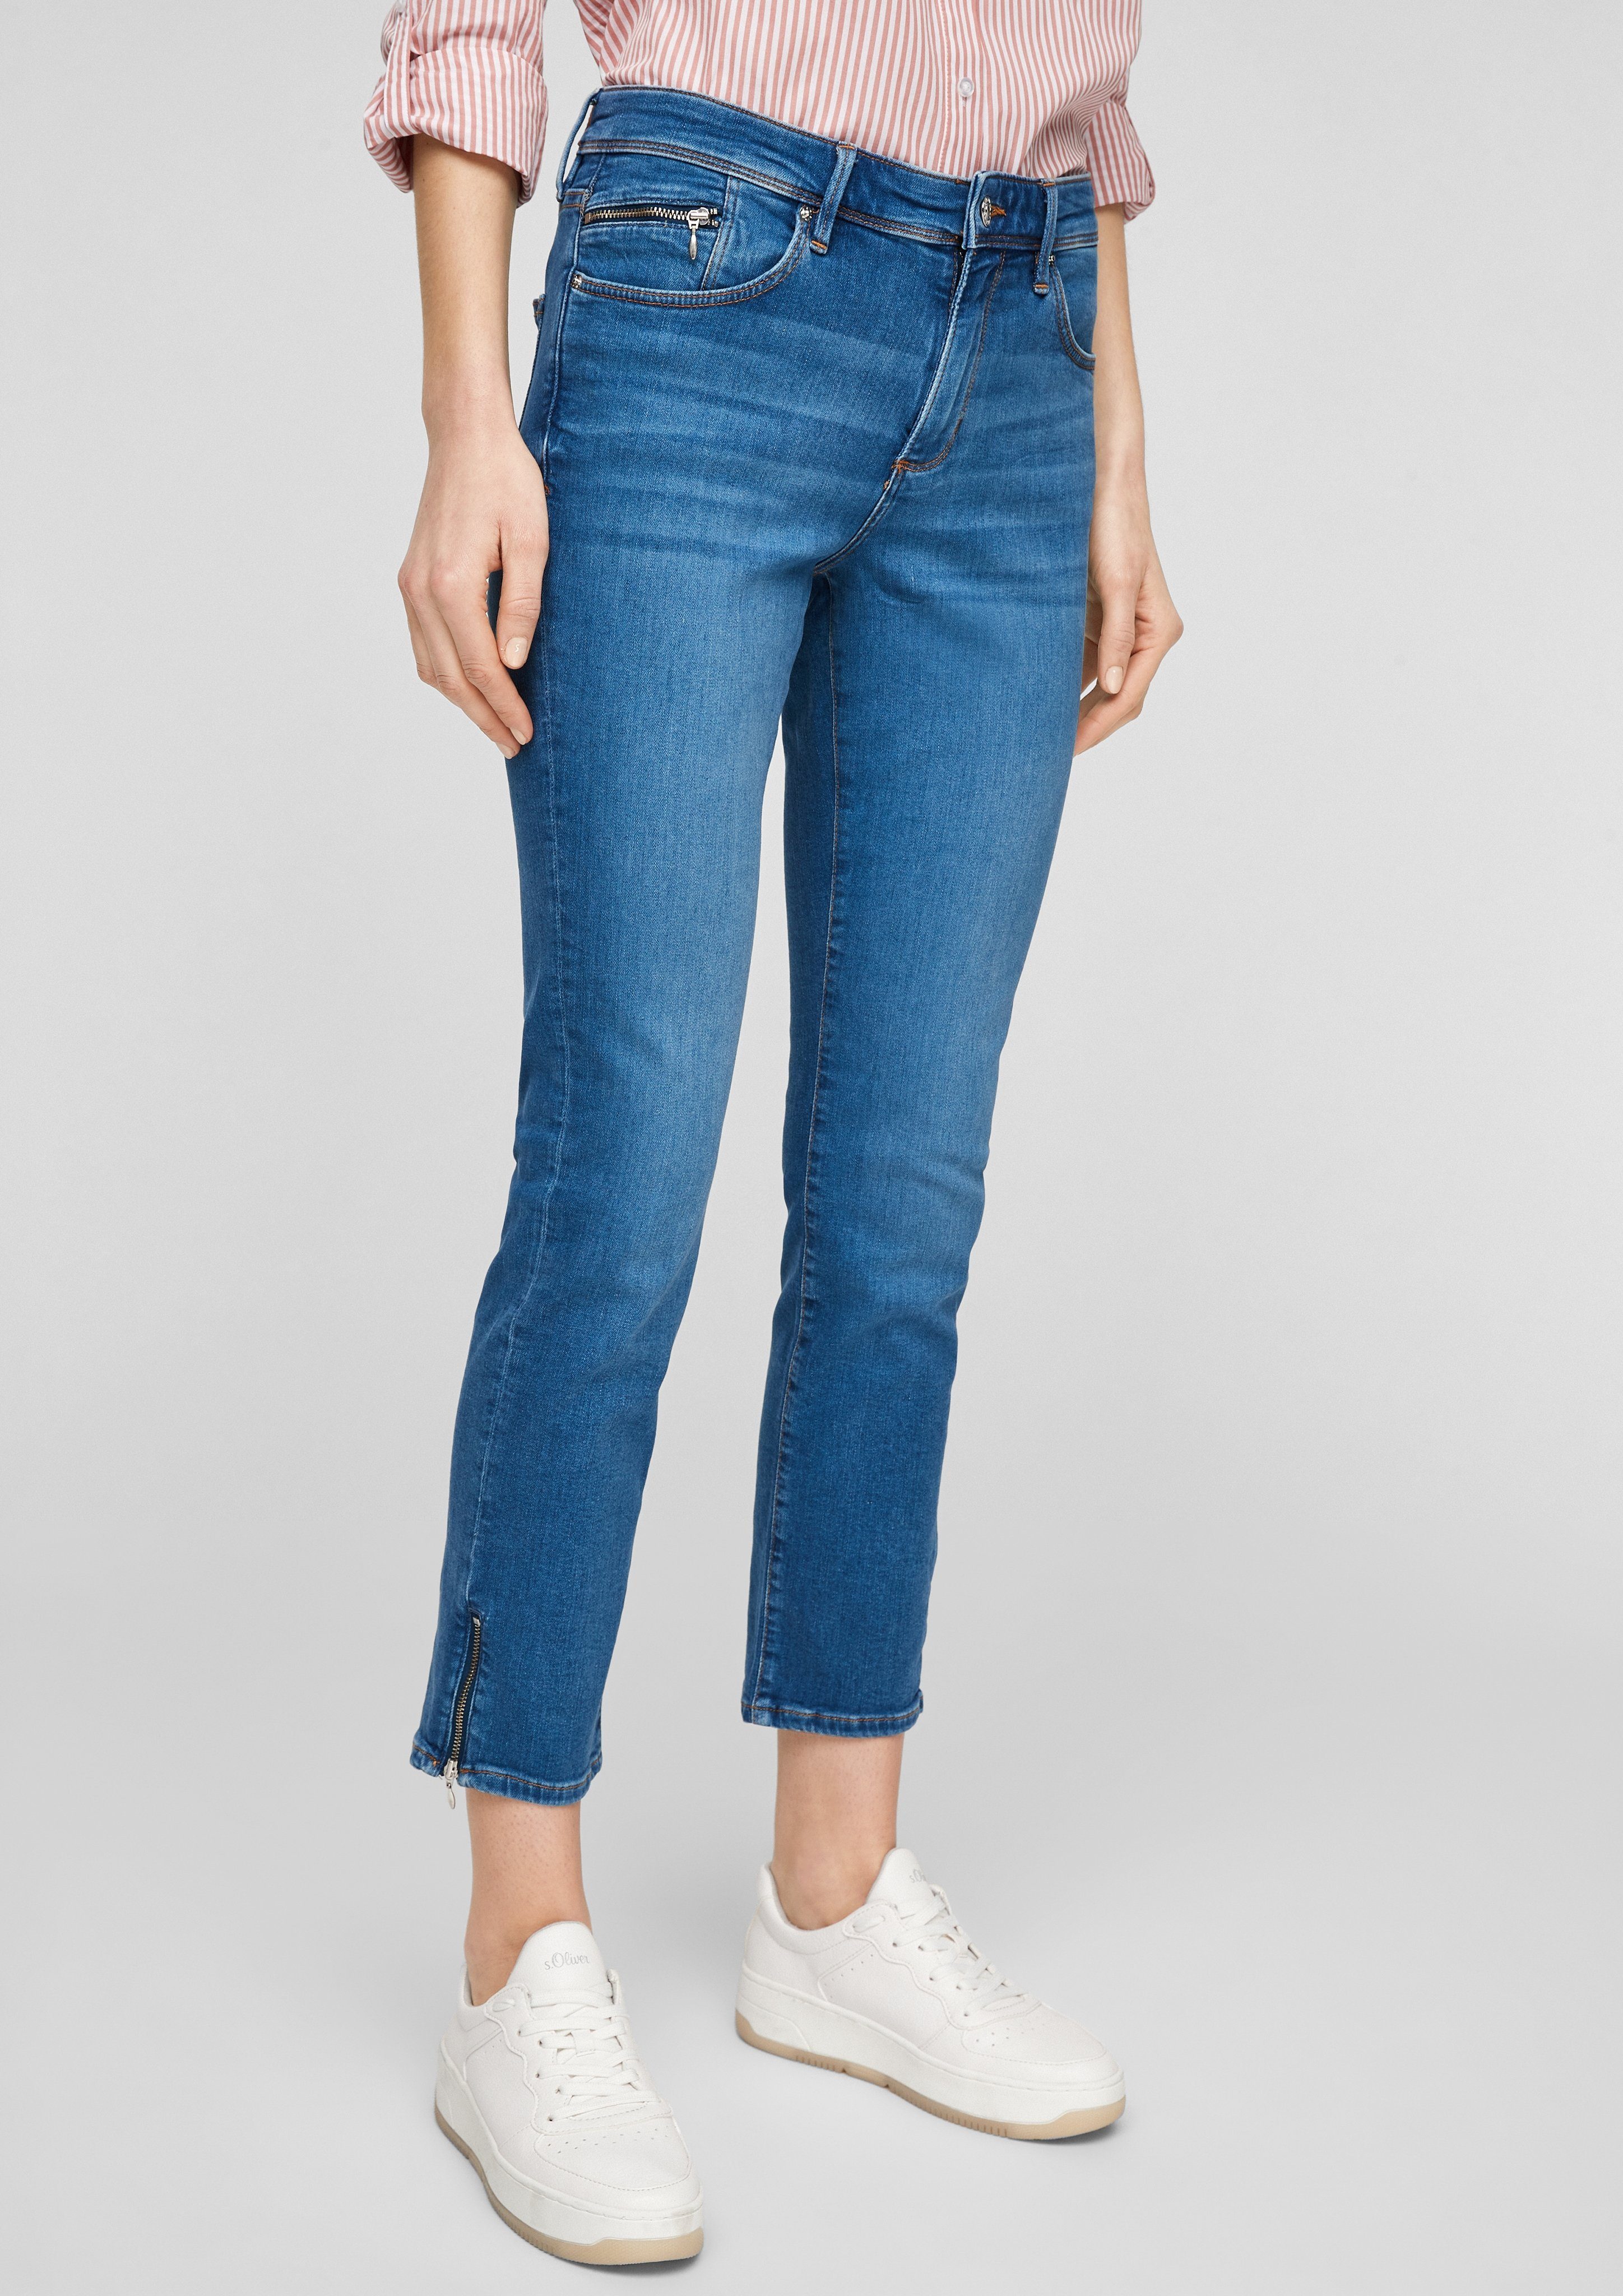 s.Oliver 7/8-Jeans »Slim Fit: Slim ankle leg-Jeans« Waschung, Leder-Patch,  Reißverschluss online kaufen | OTTO